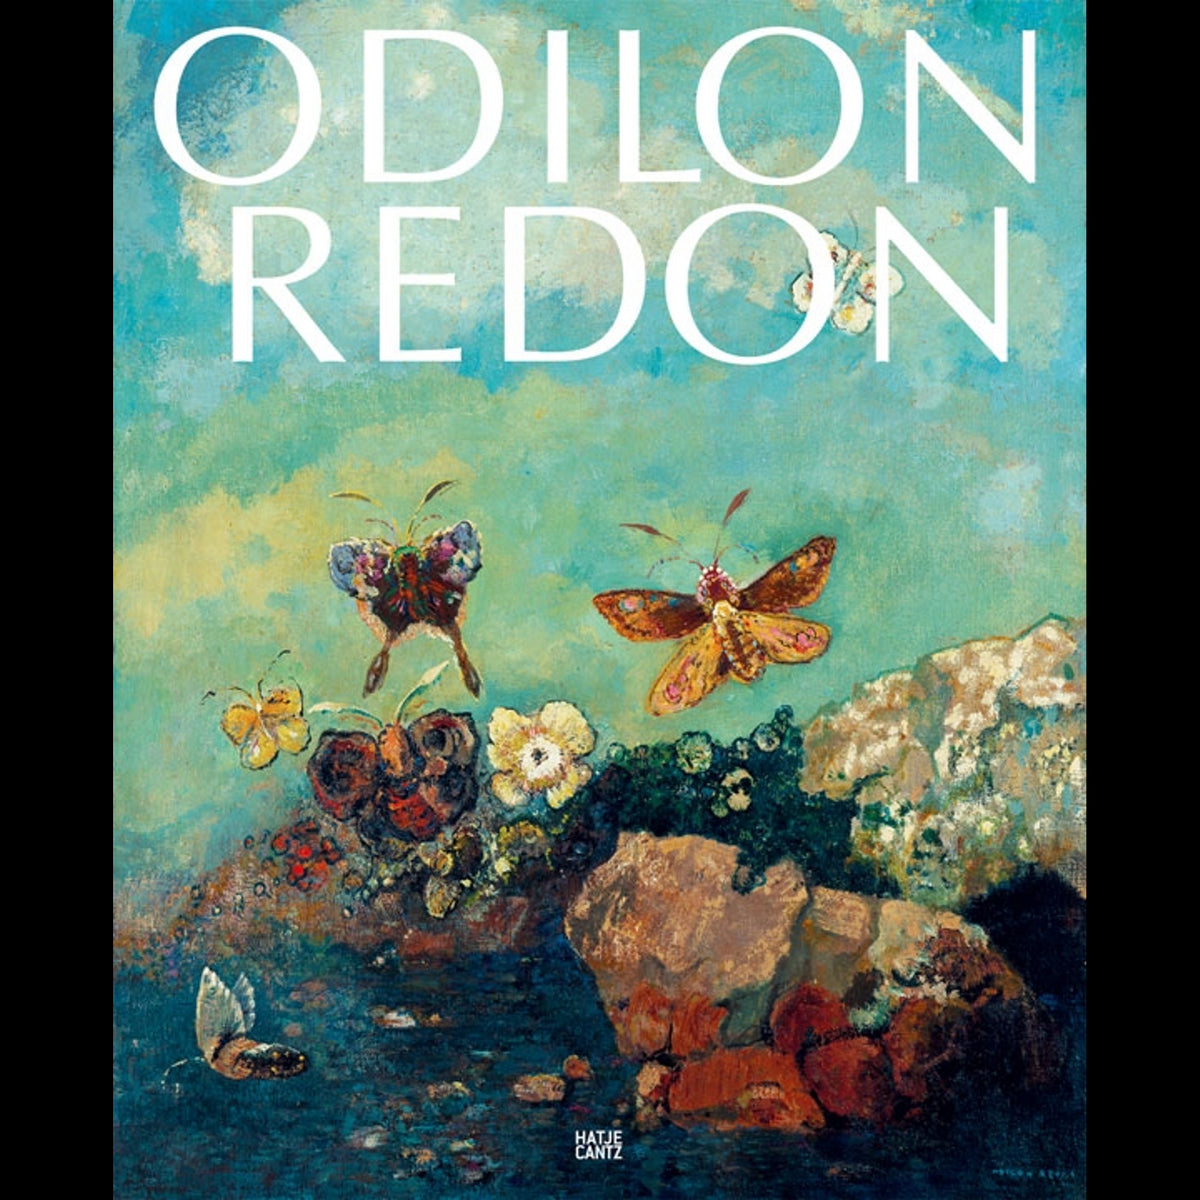 Coverbild Odilon Redon